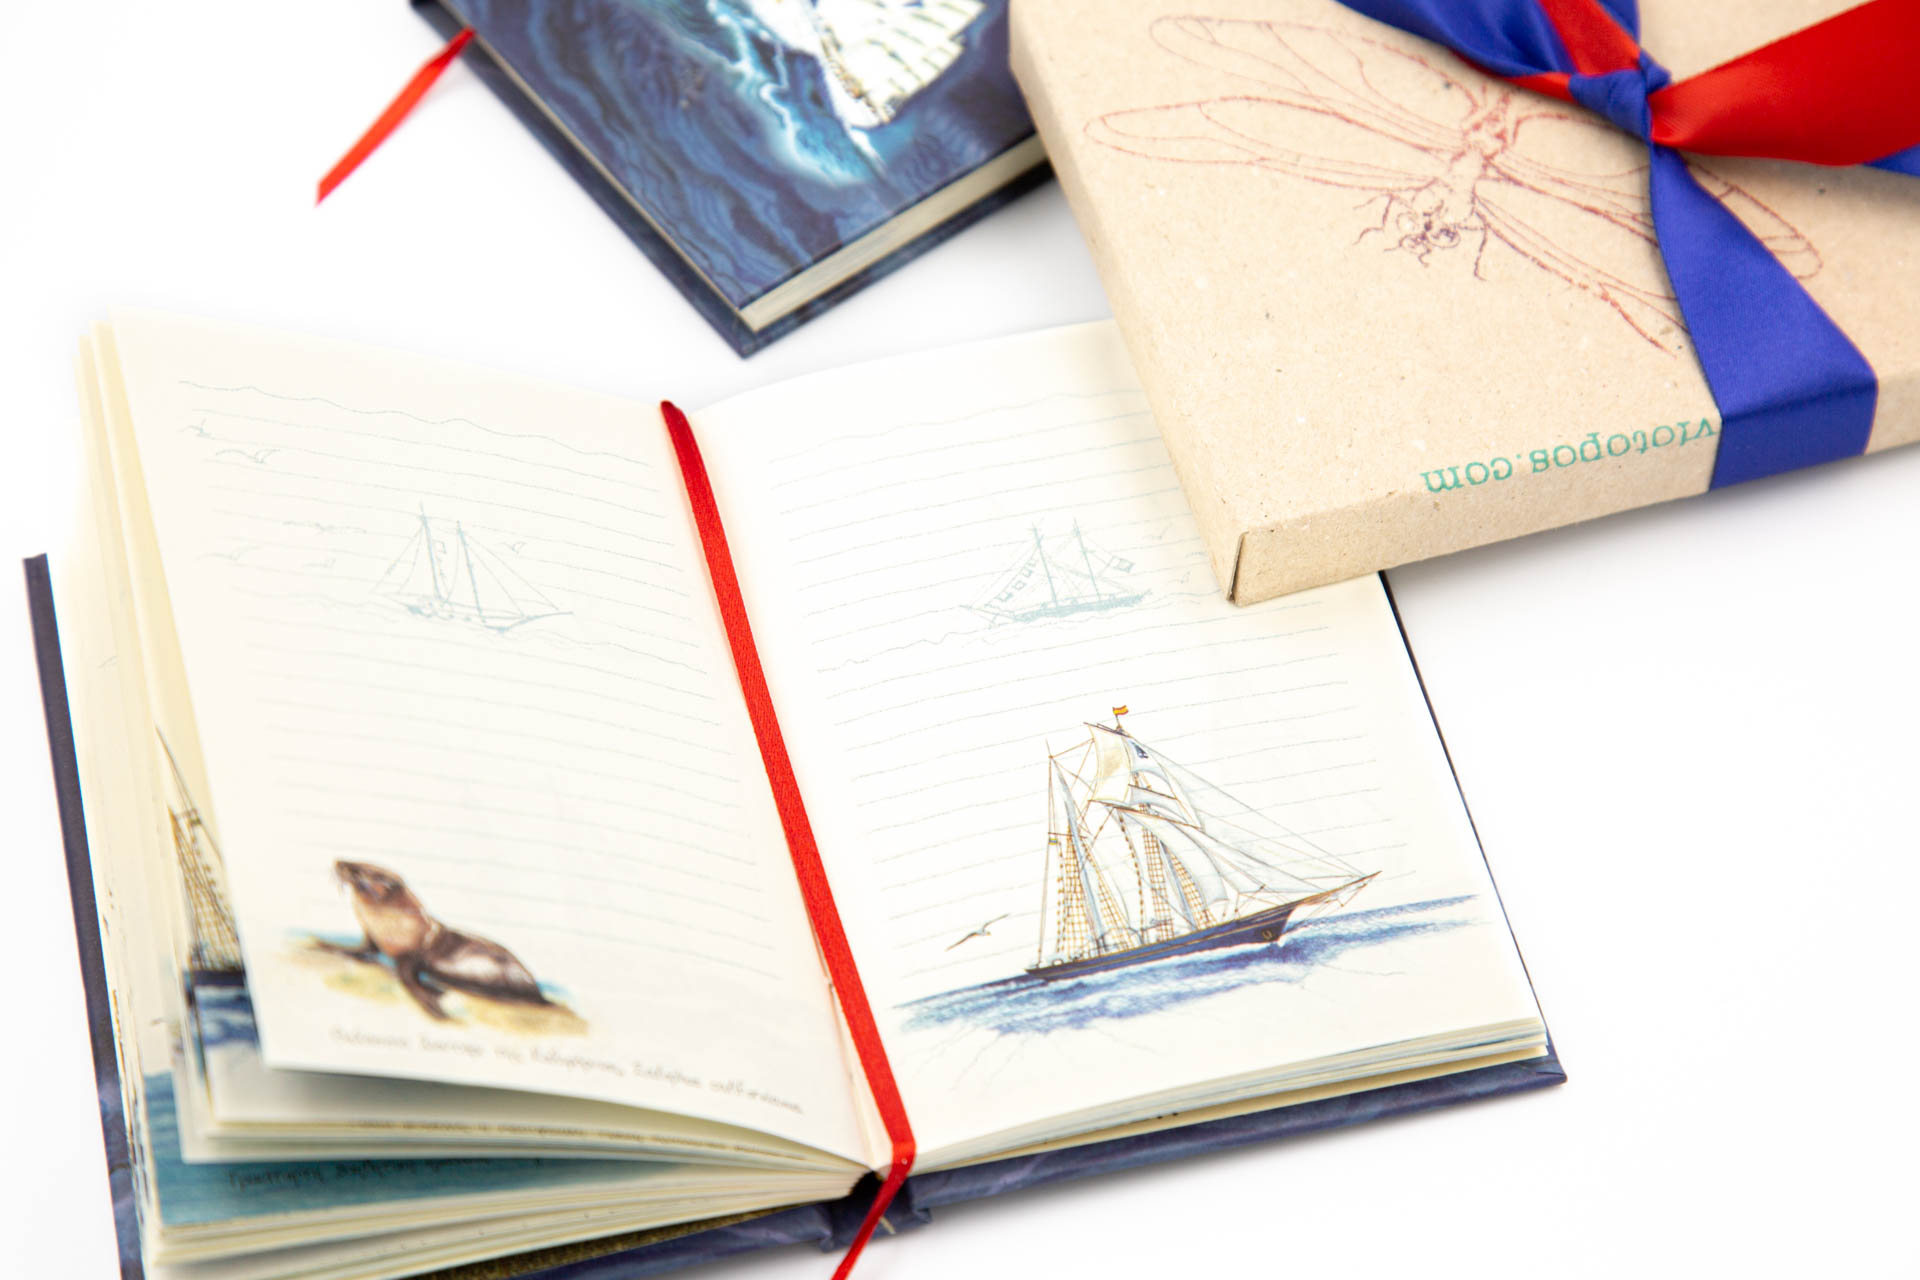 Small notebook "Sailboats" - Details